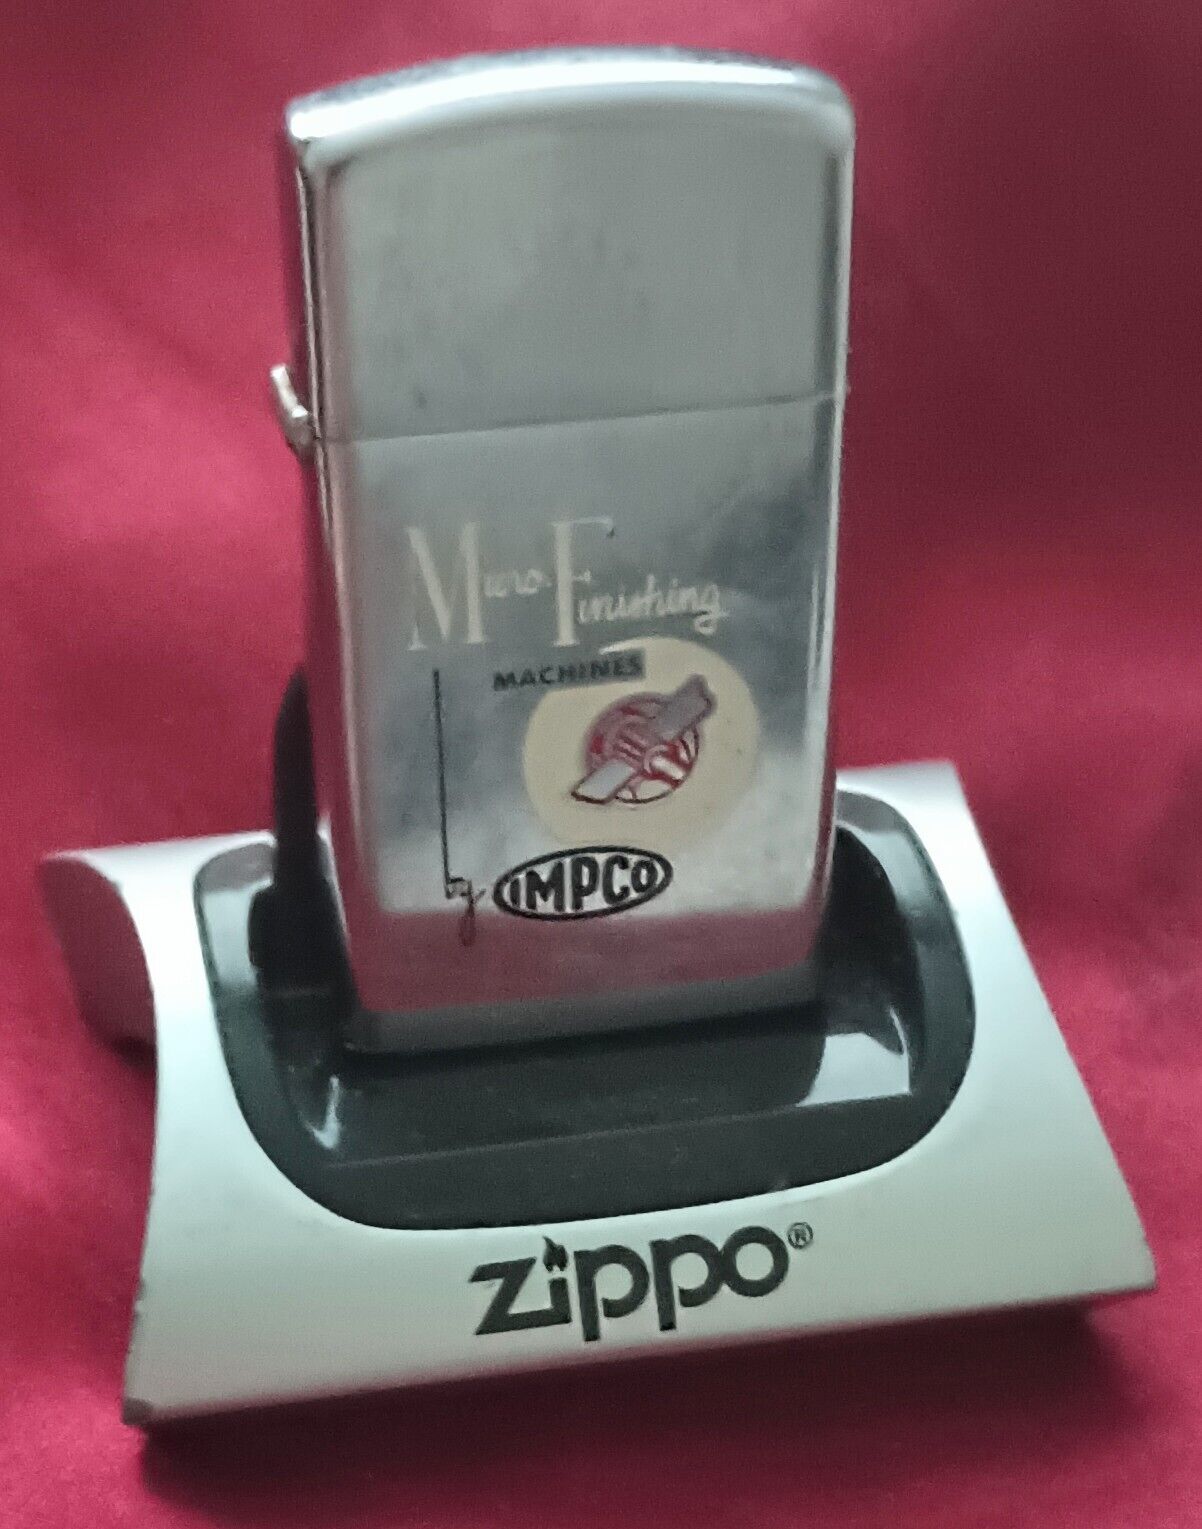 1977-1996 Slim Zippo Sliver Lighter Muro Finishing Machines By Impco Advertising